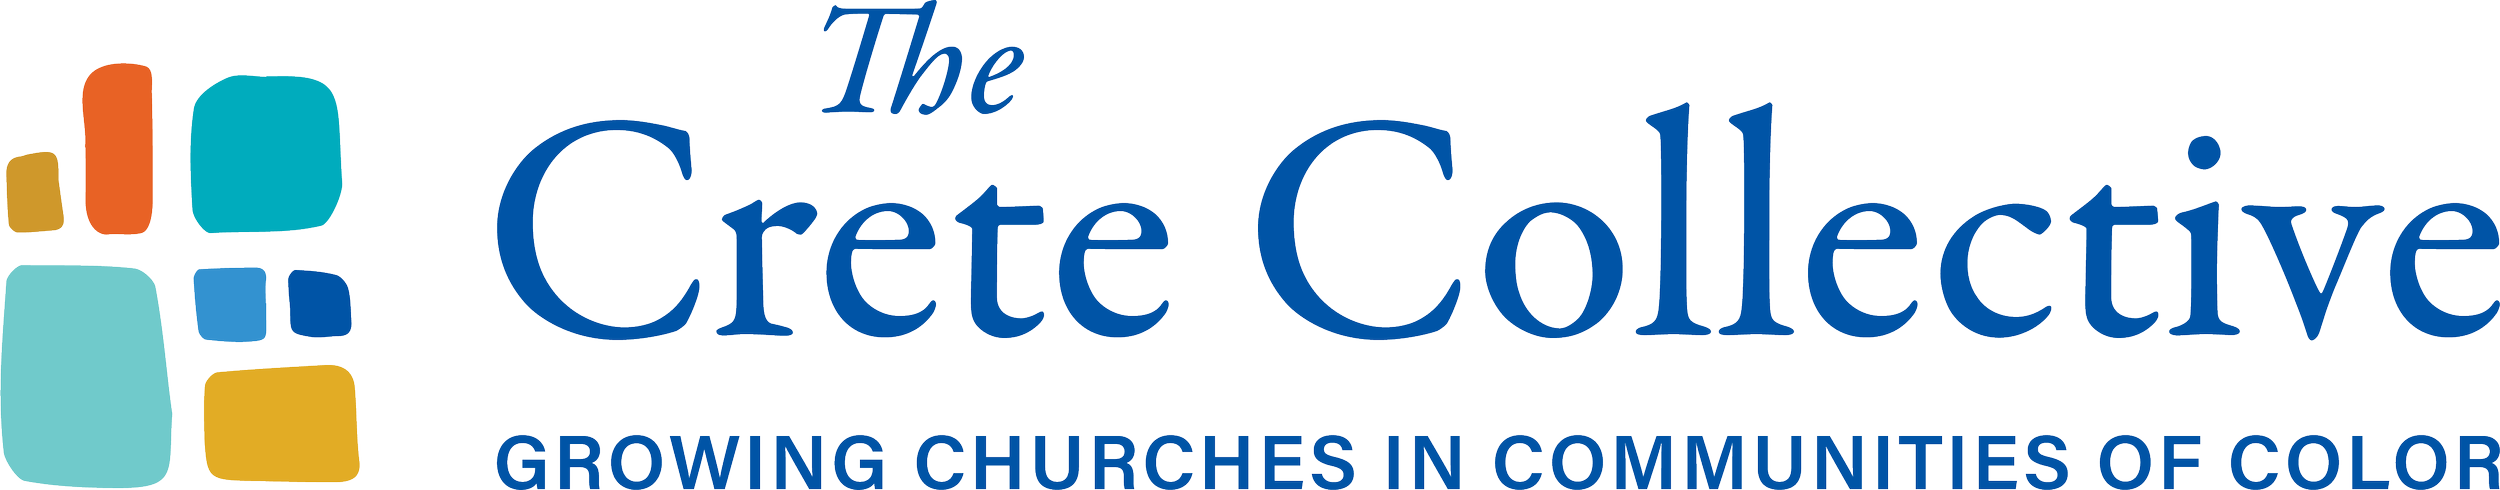 Crete Collective Logo Horizontal.png